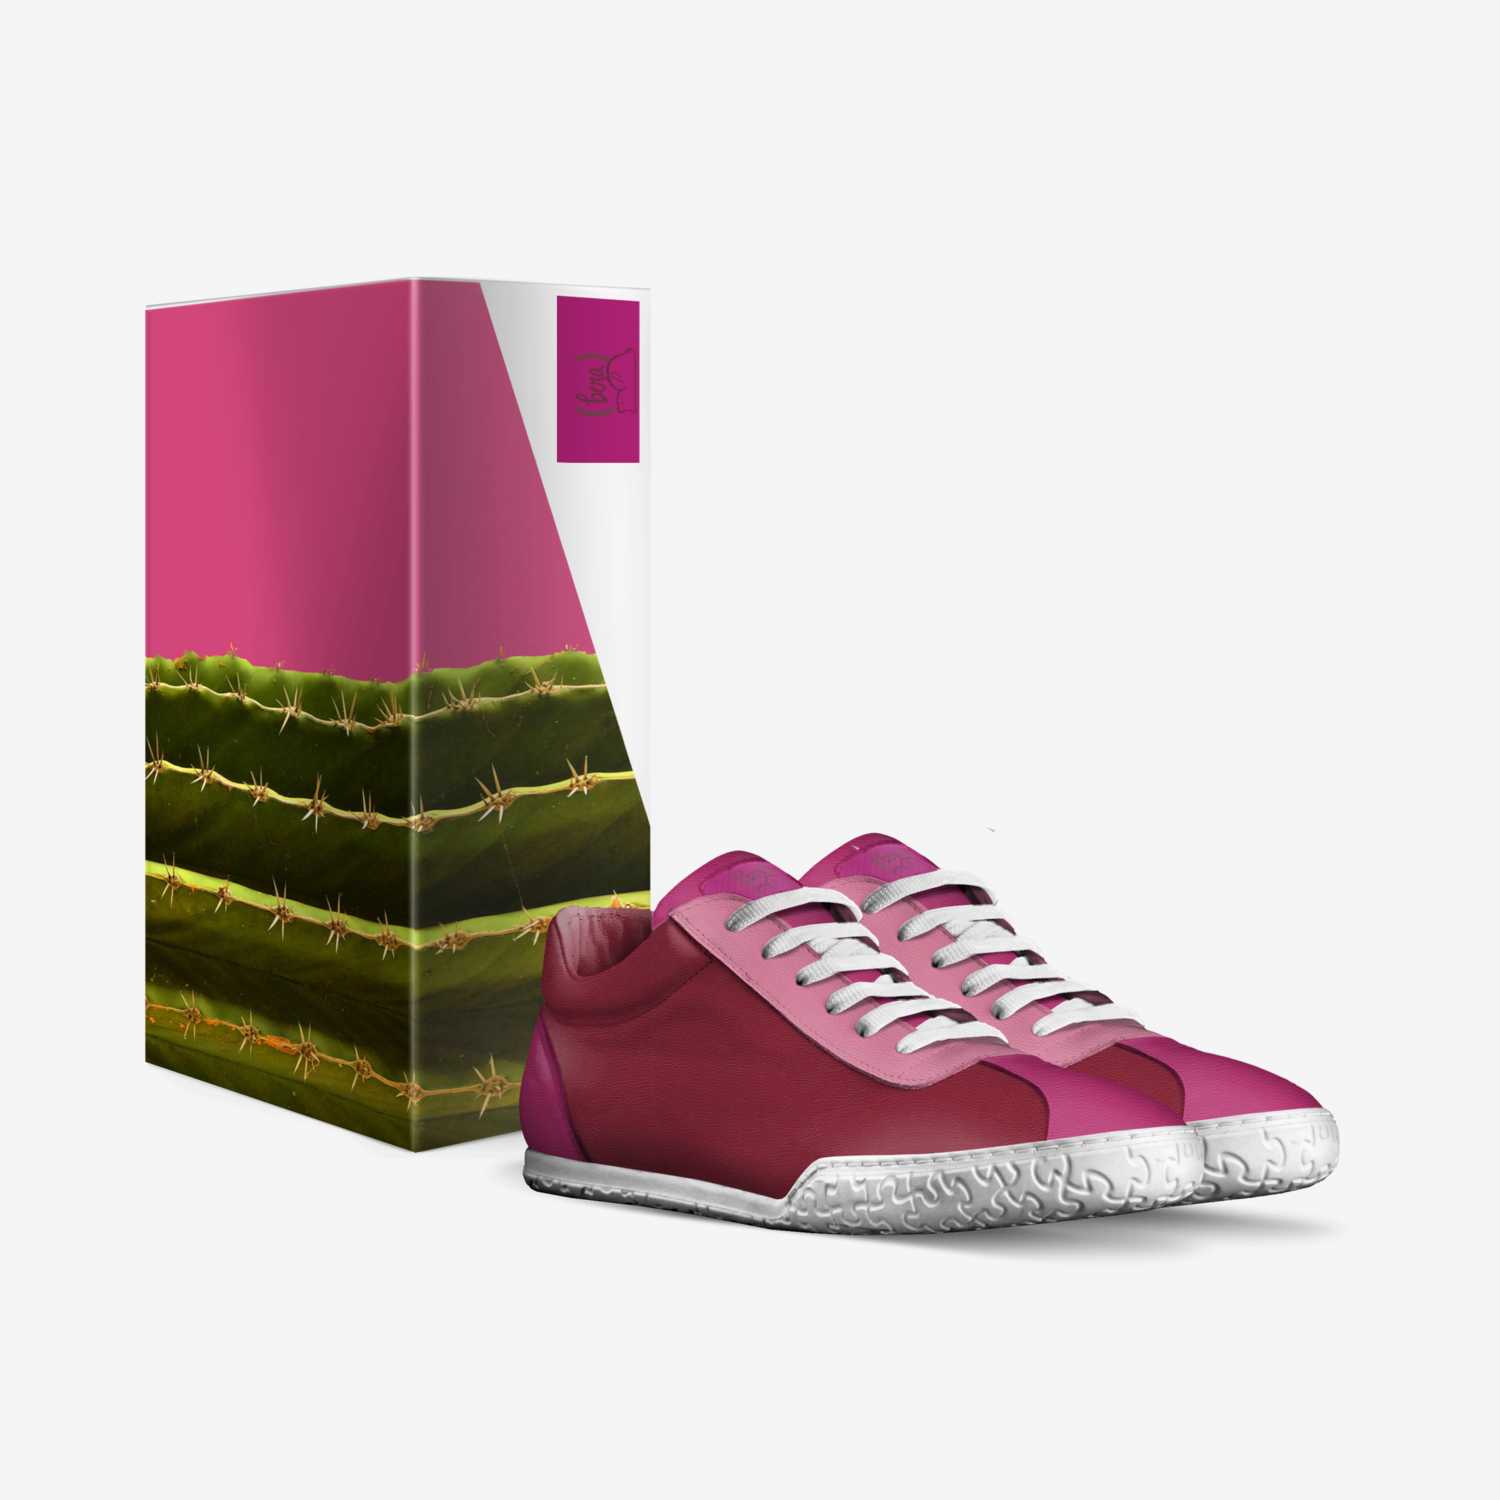 Bera custom made in Italy shoes by Natasha Martin | Box view